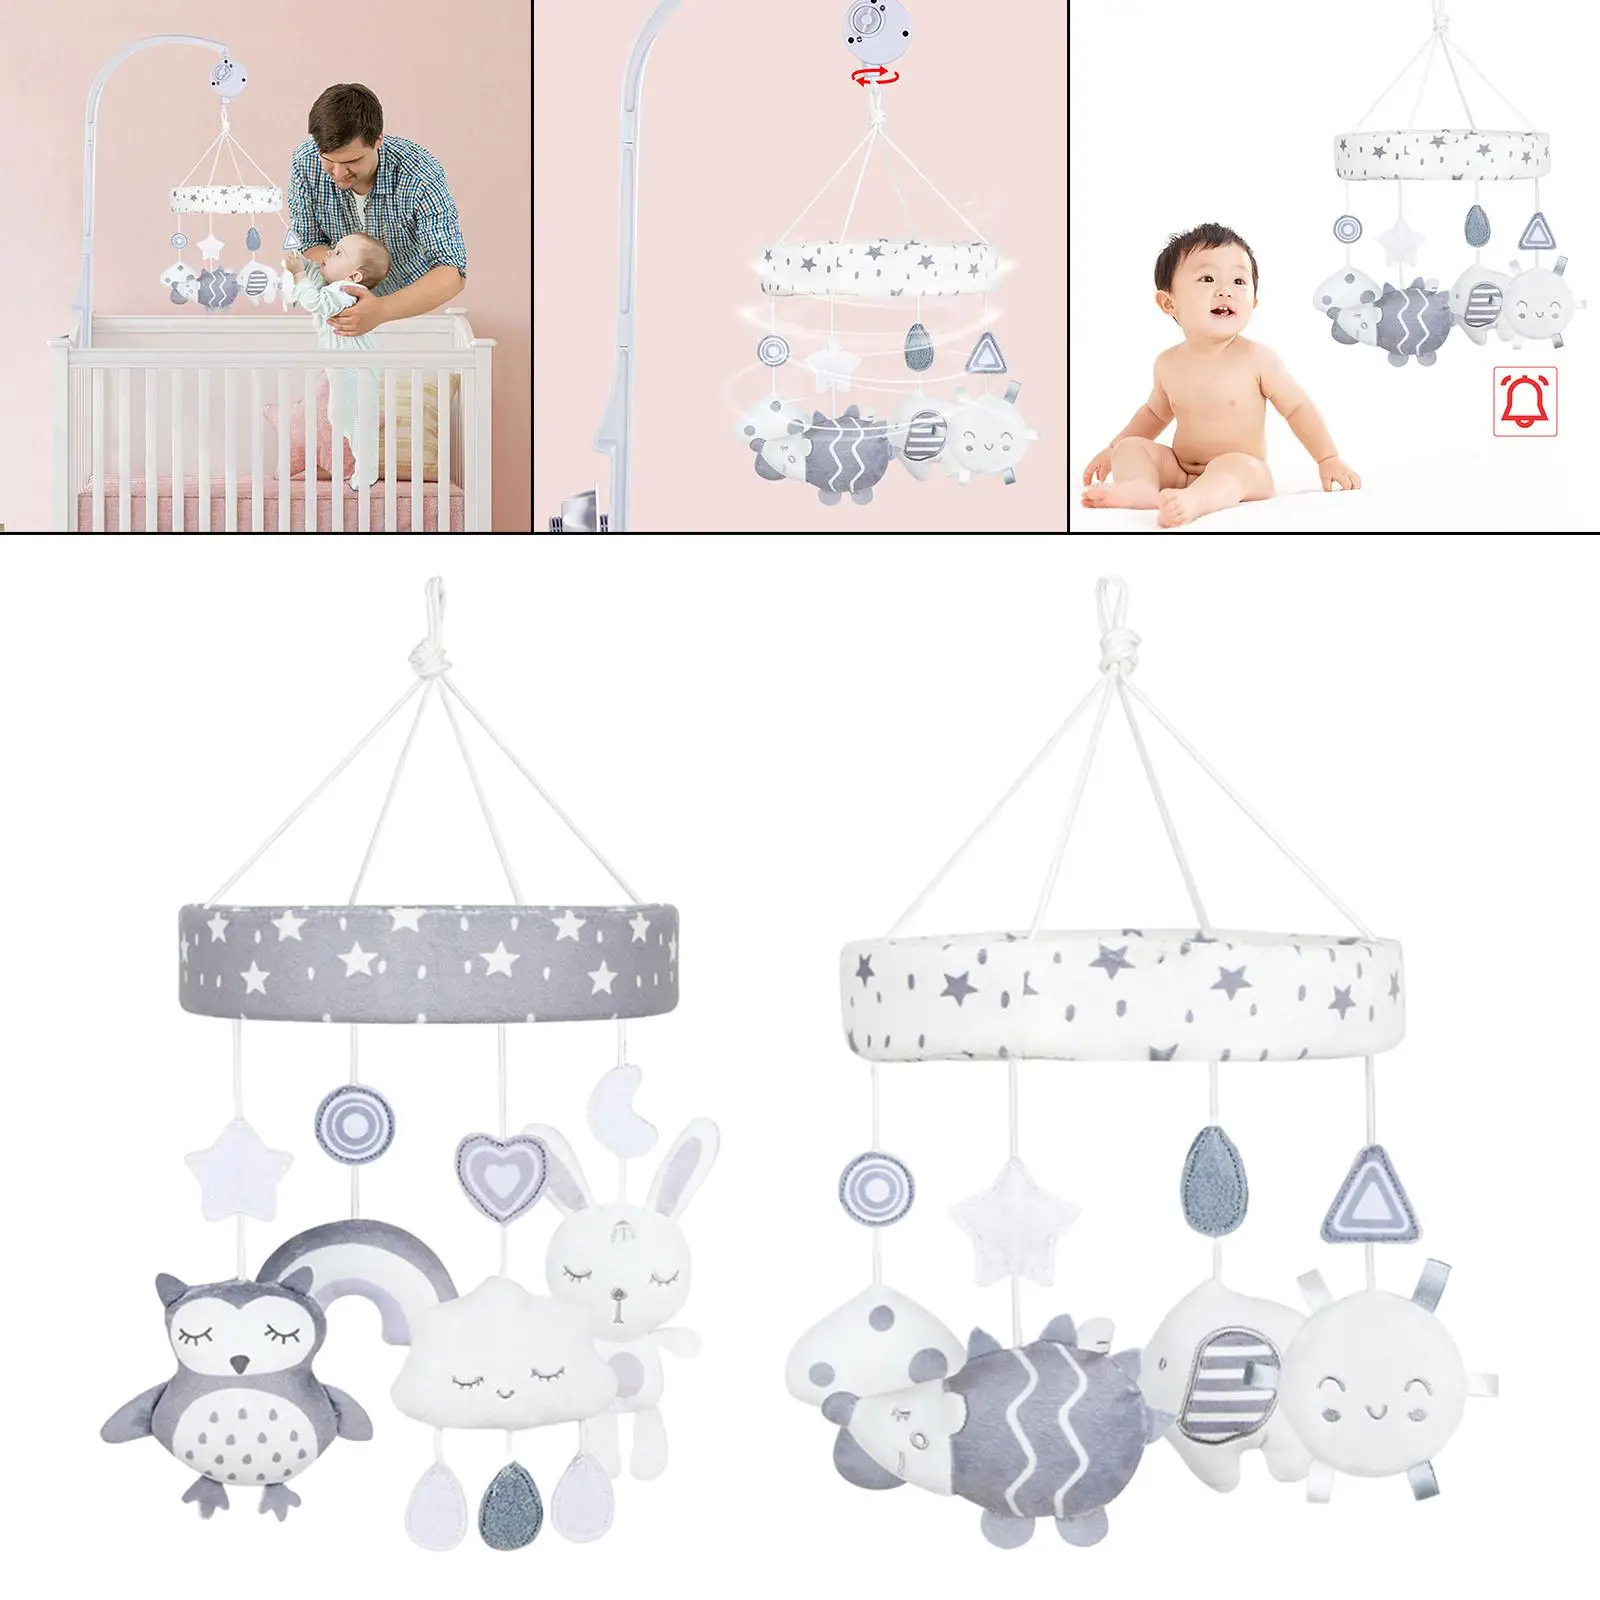 Nursery Crib Mobile Stroller Hanging Toy Newborn Rattles Mobile for Infants